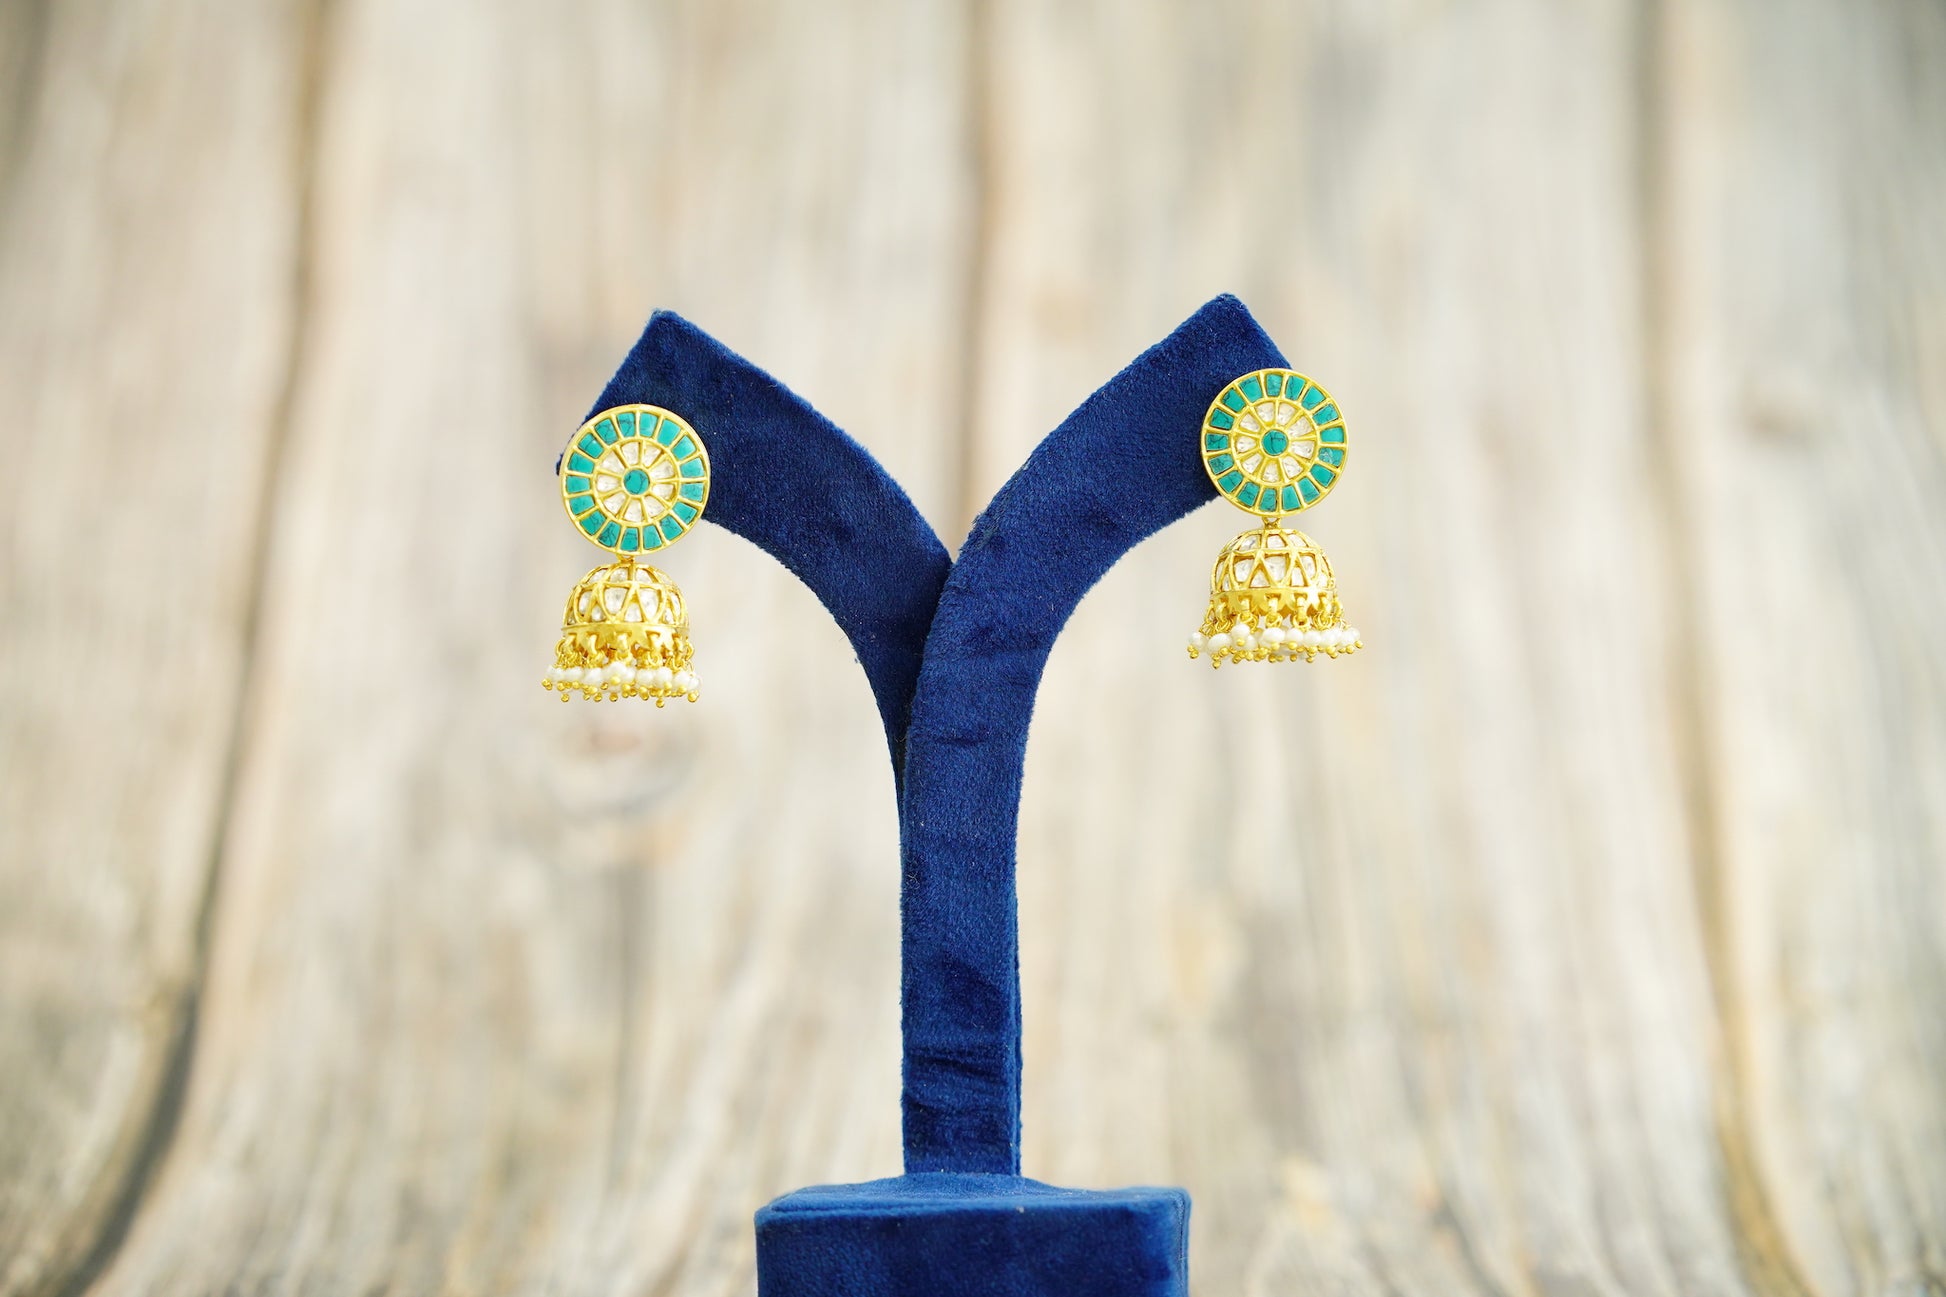 925 Silver Gold Plated Turquoise and Kundan Earrings with Kundan Jhumki - Neeta Boochra Jewellery